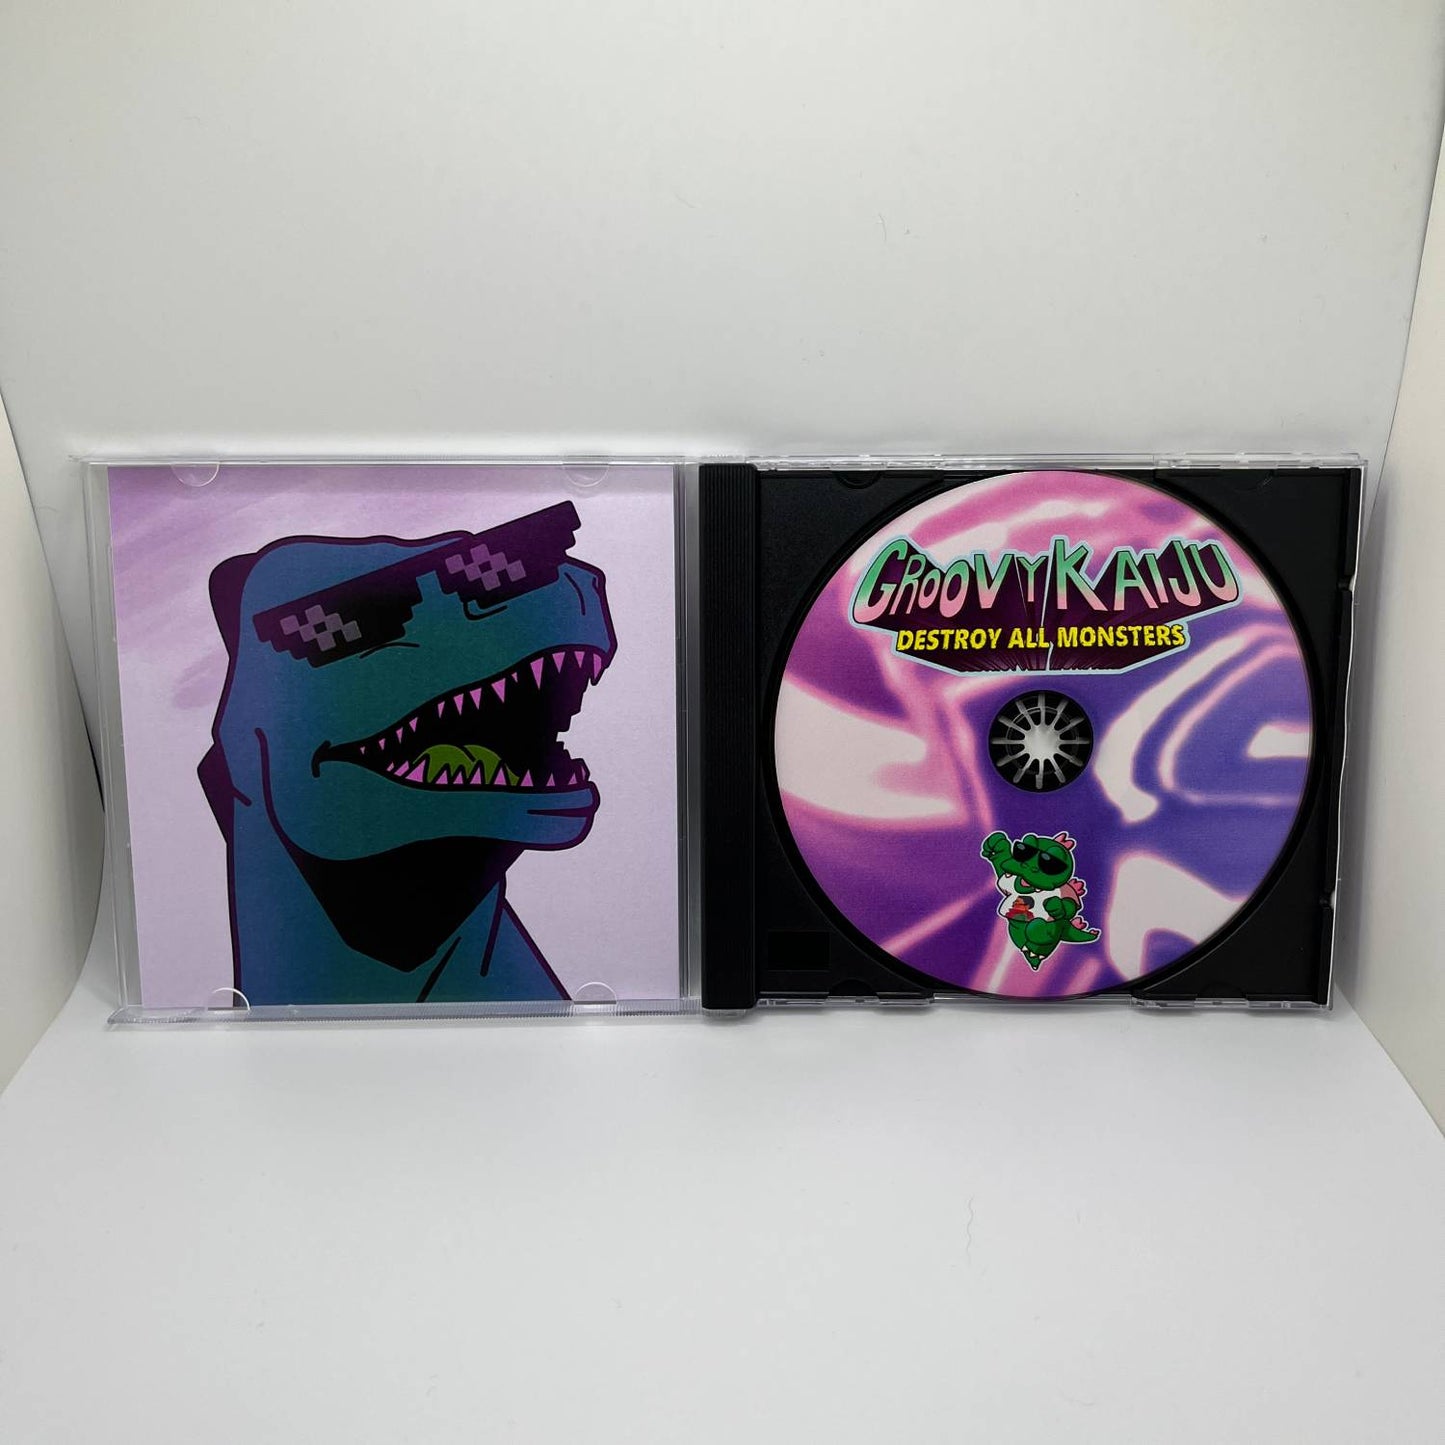 Groovy Kaiju - Destroy All Monsters CD